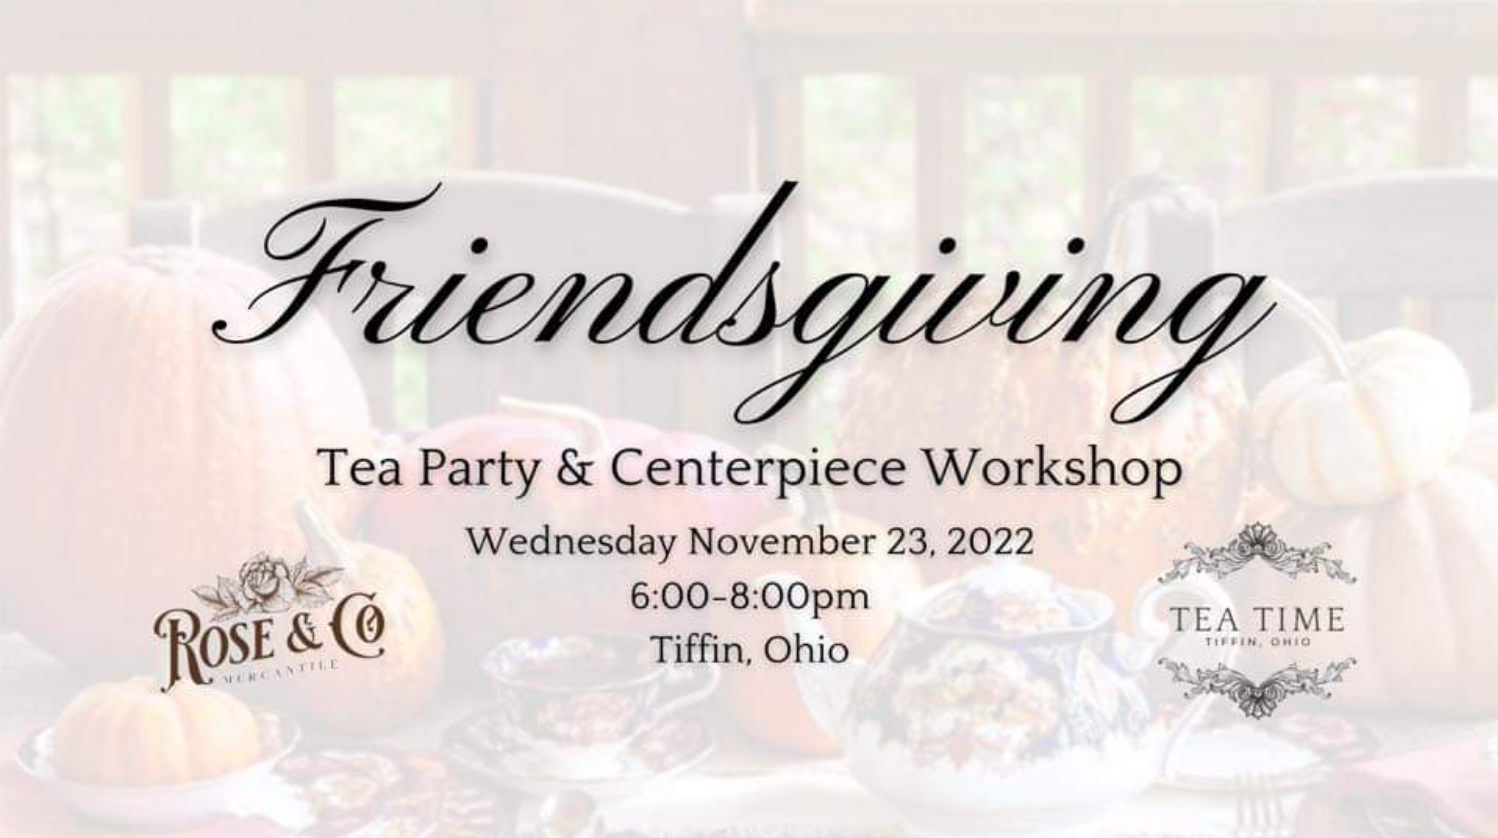 Friendsgiving Tea Party & Centerpiece Workshop